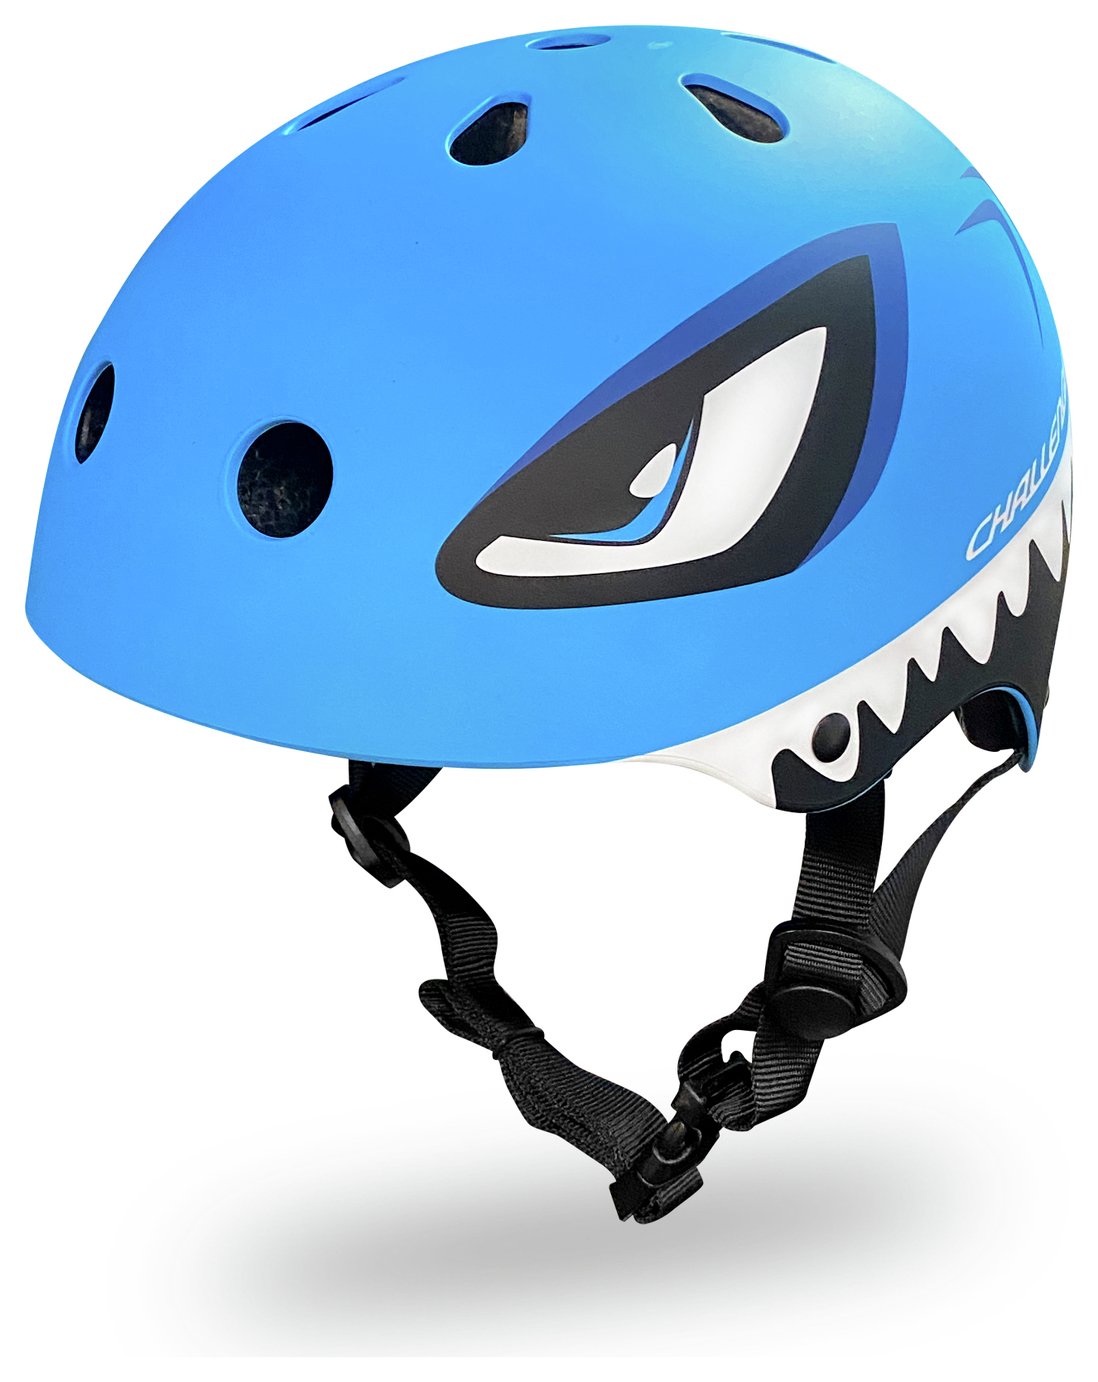 Challenge Shark Kids BMX Bike Helmet - Blue, 51-54cm